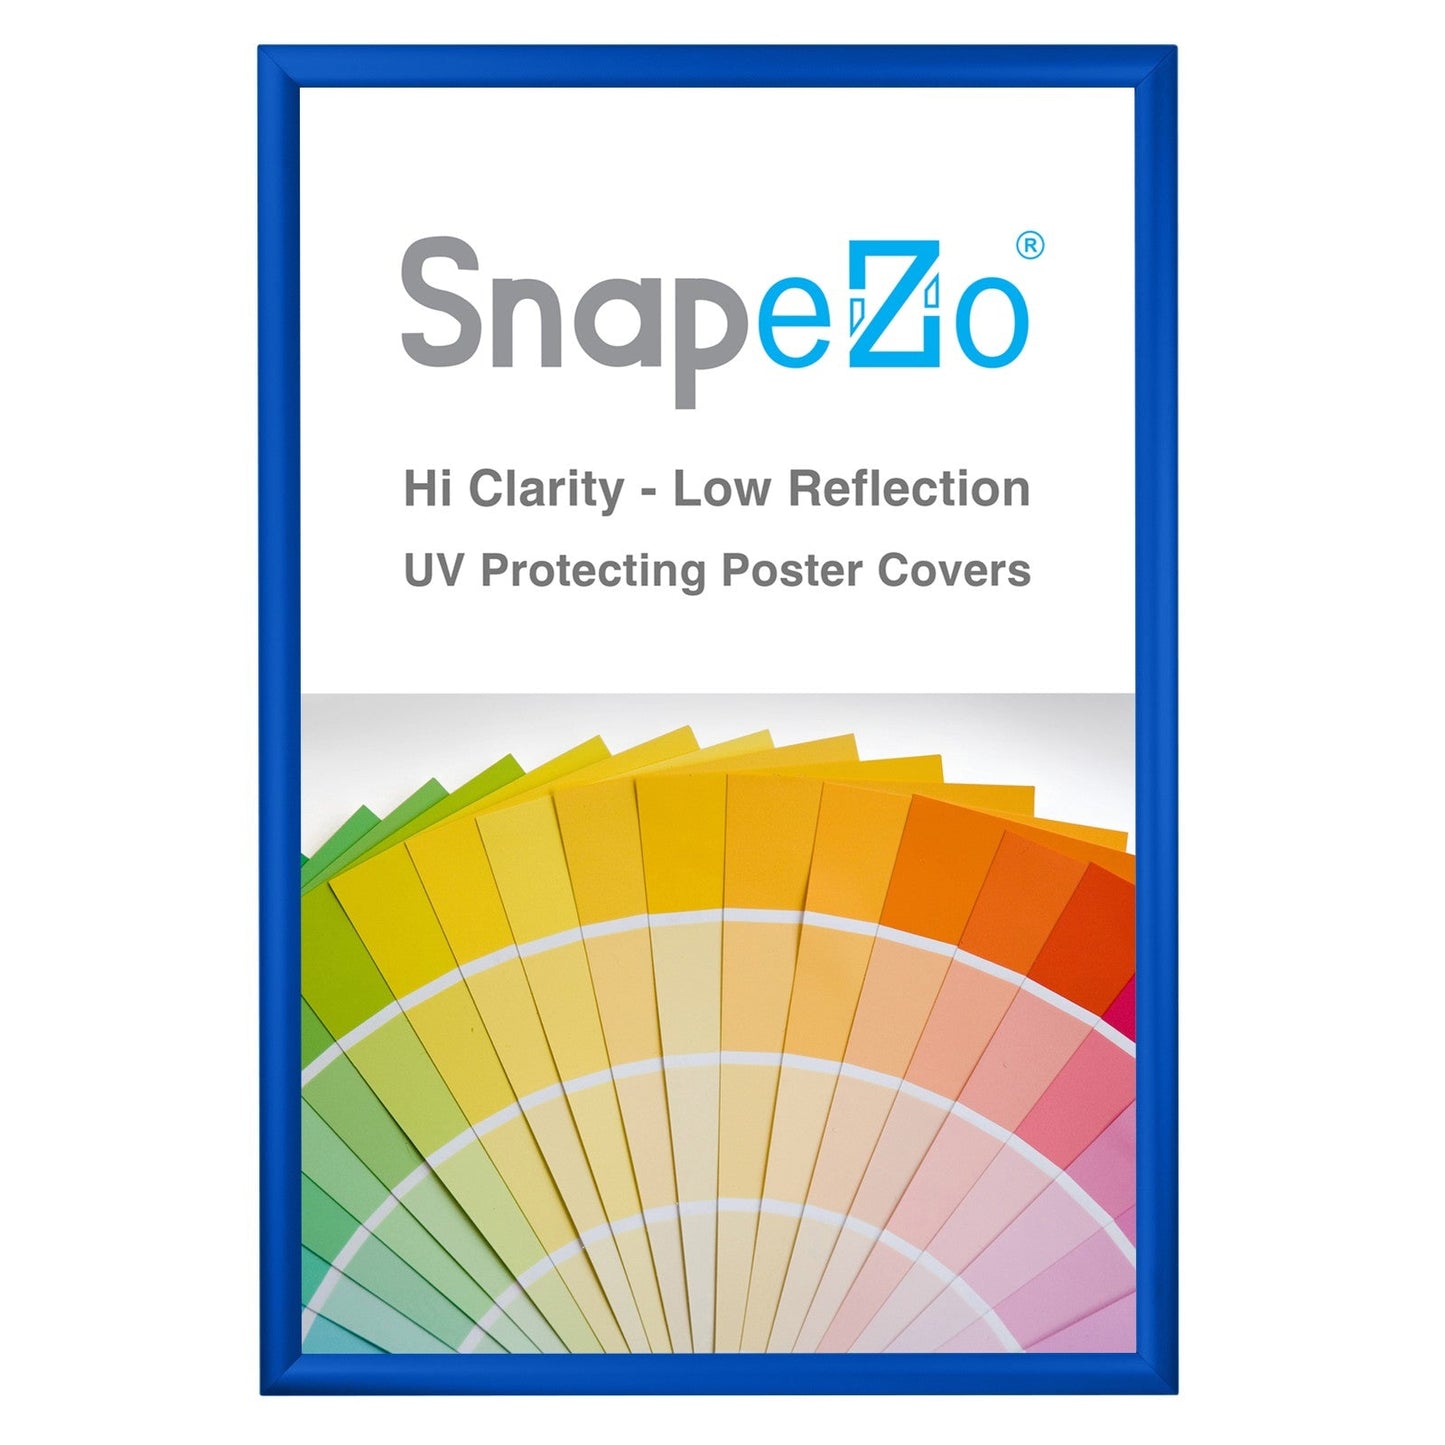 26x38 Blue SnapeZo® Snap Frame - 1.2" Profile